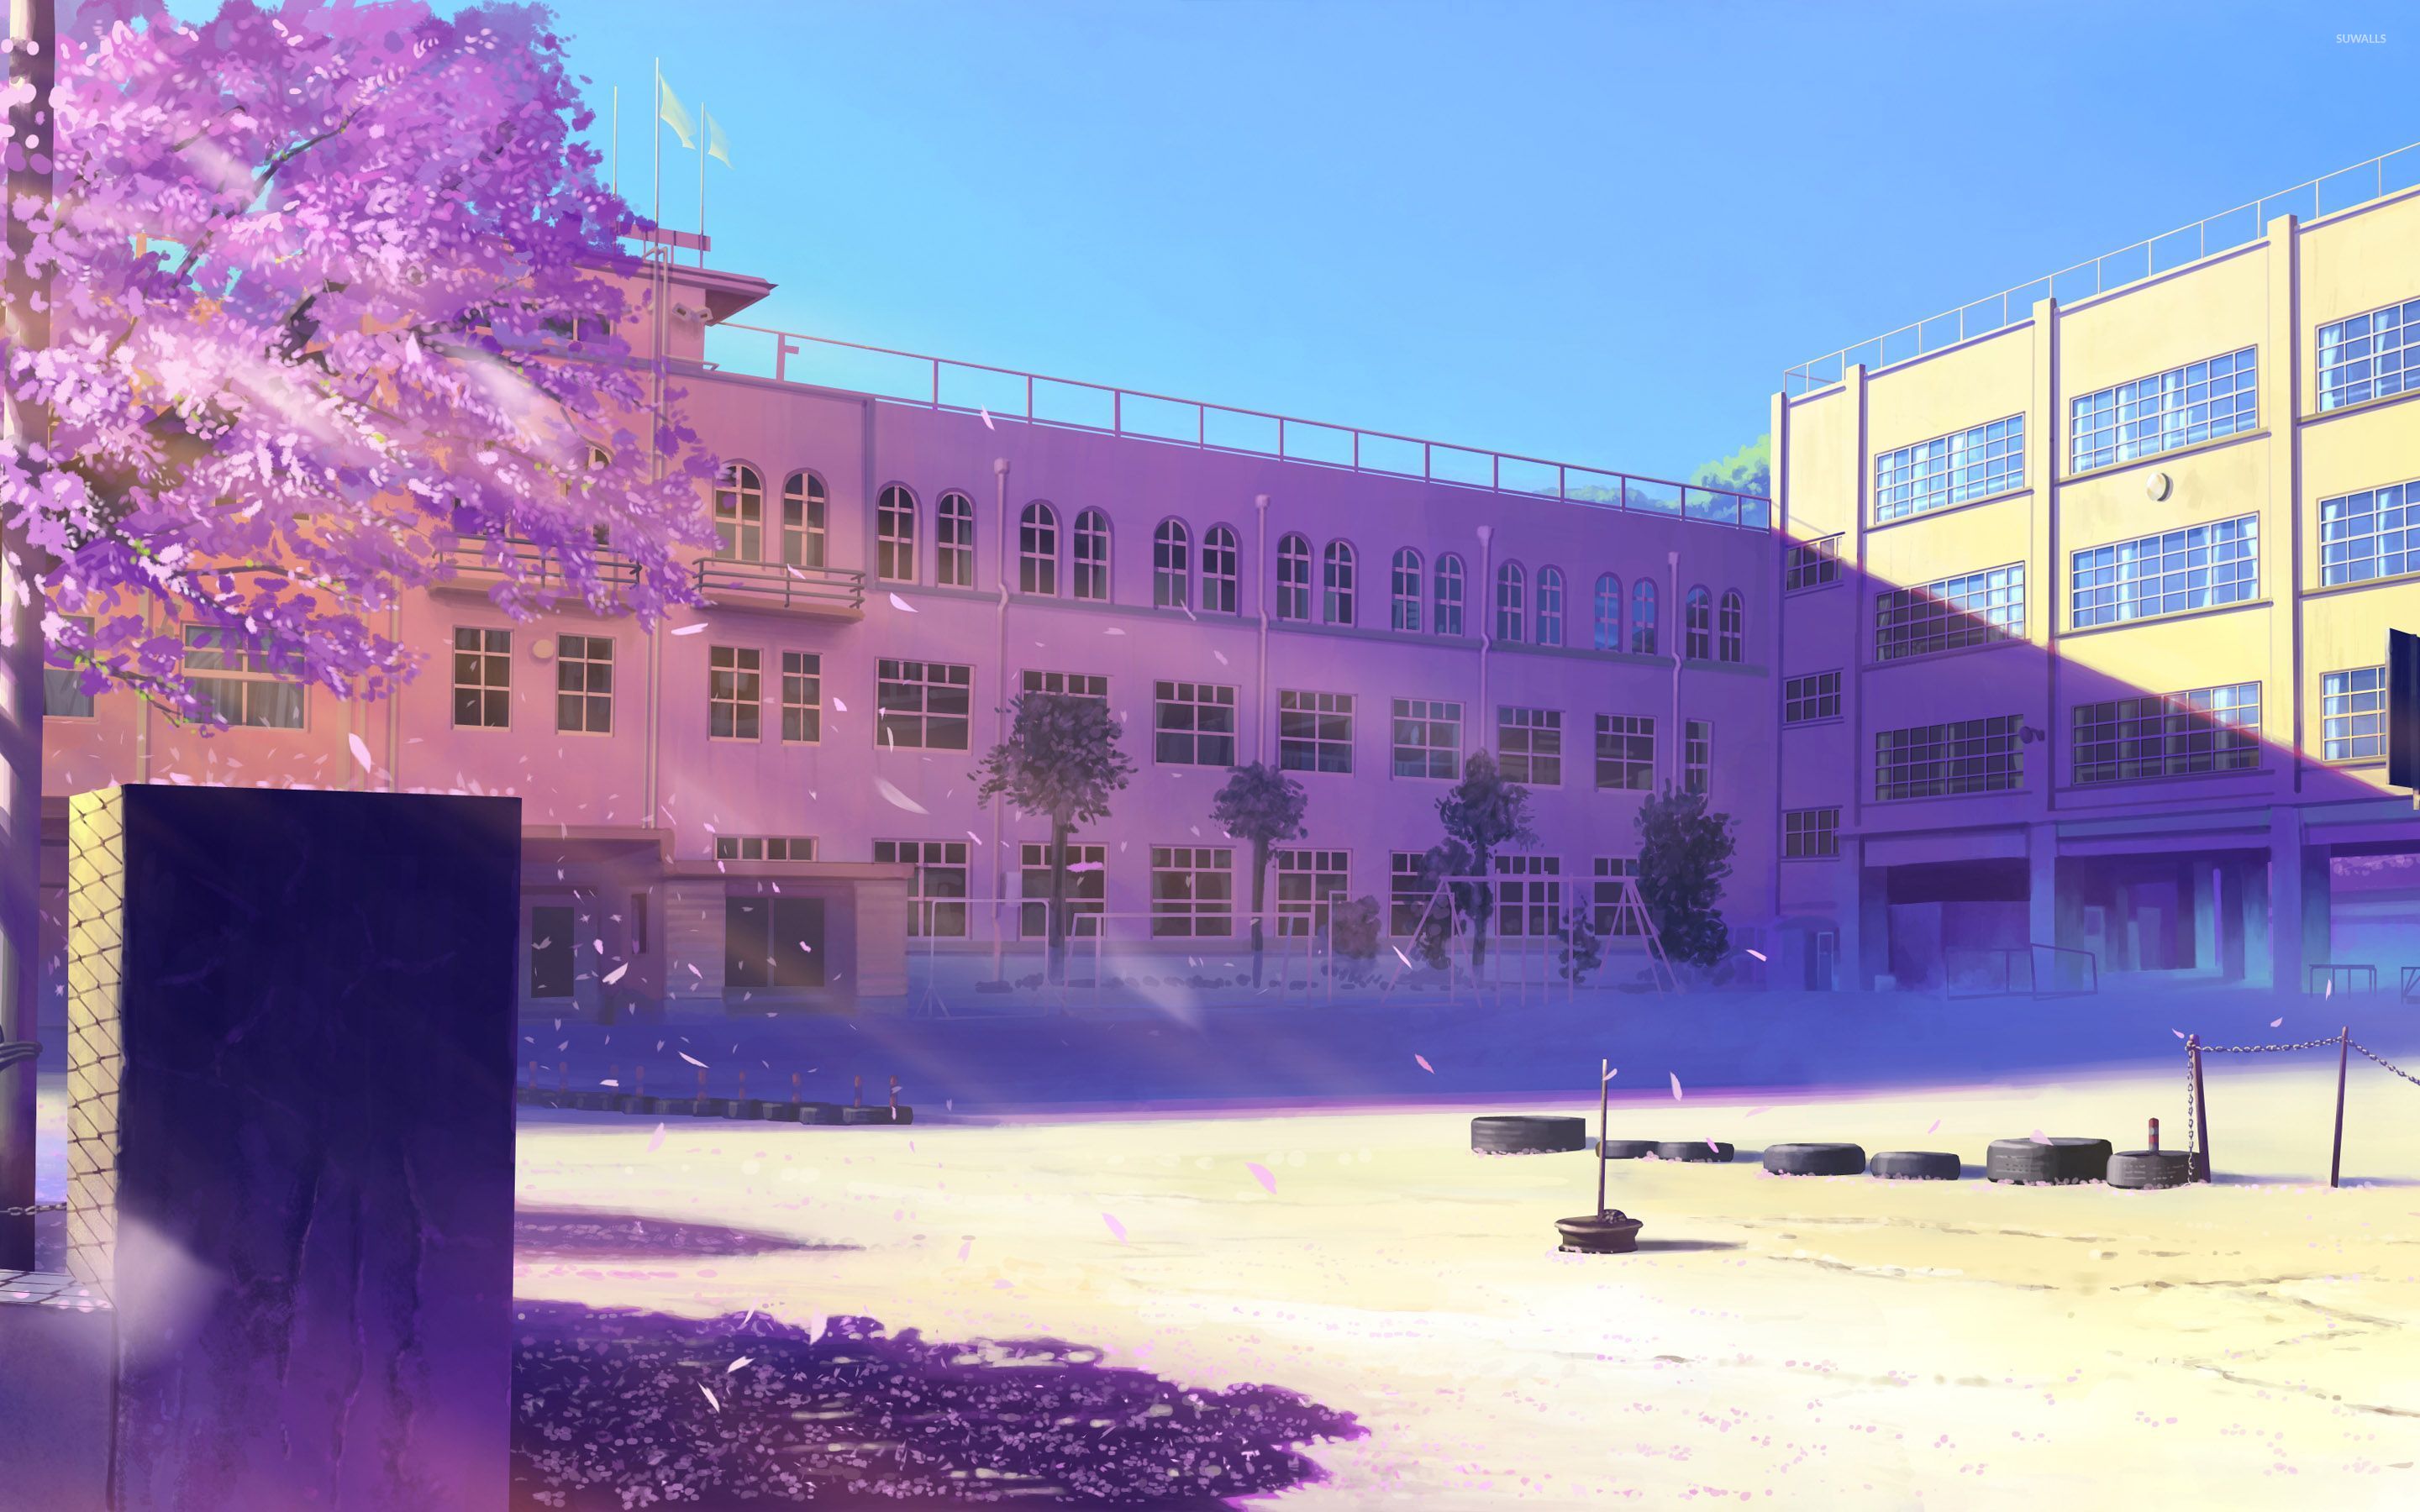 51+] Anime Landscape Wallpapers - WallpaperSafari